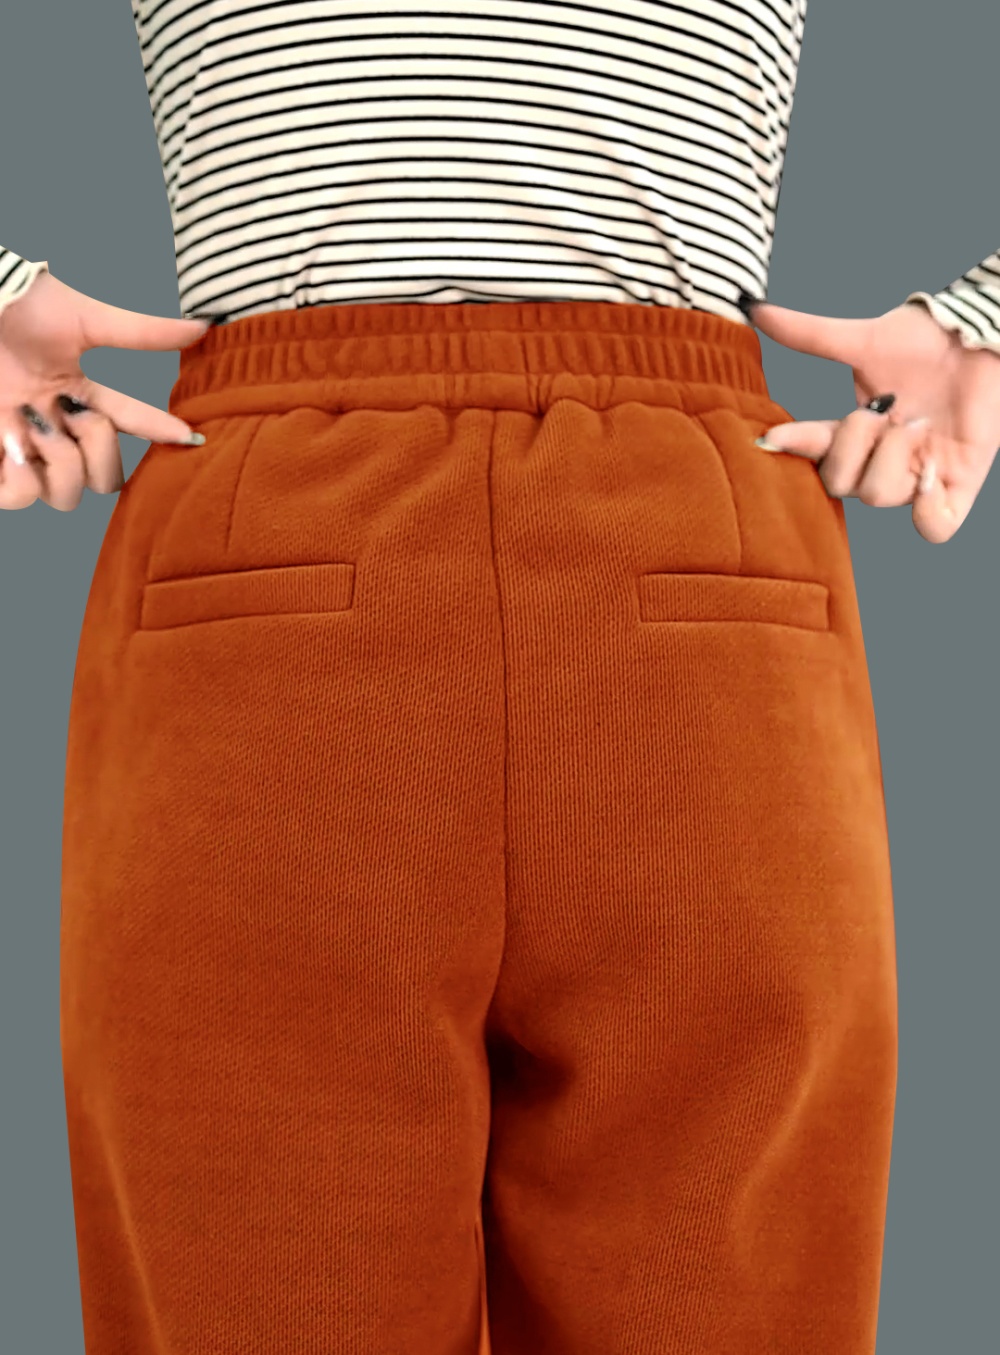 Casual straight sweatpants slim high waist harem pants for women